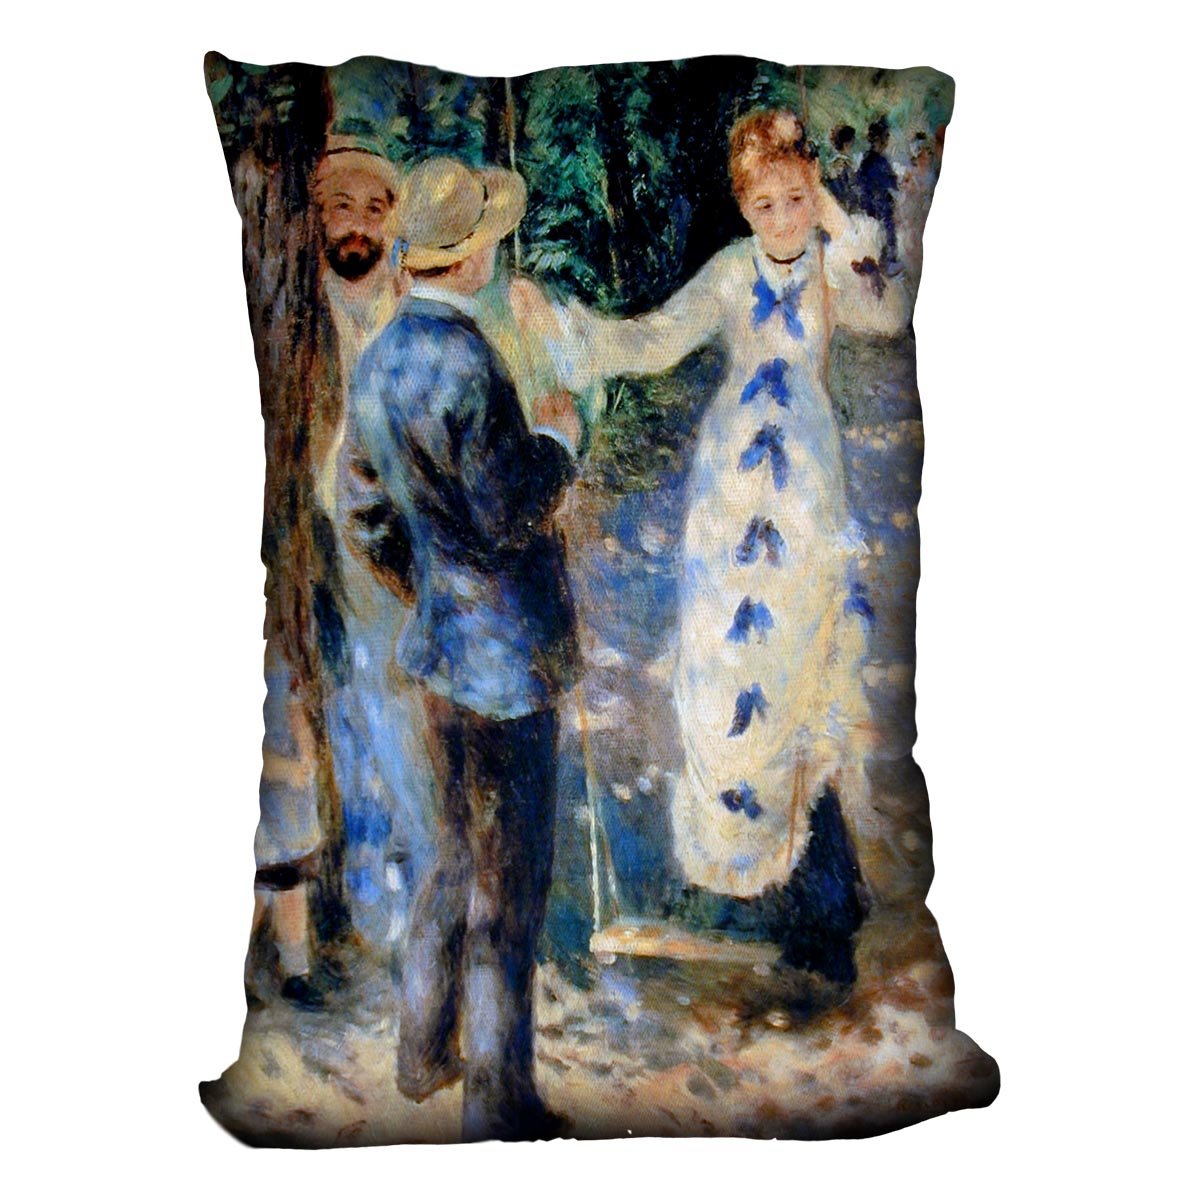 Famille by Renoir Throw Pillow